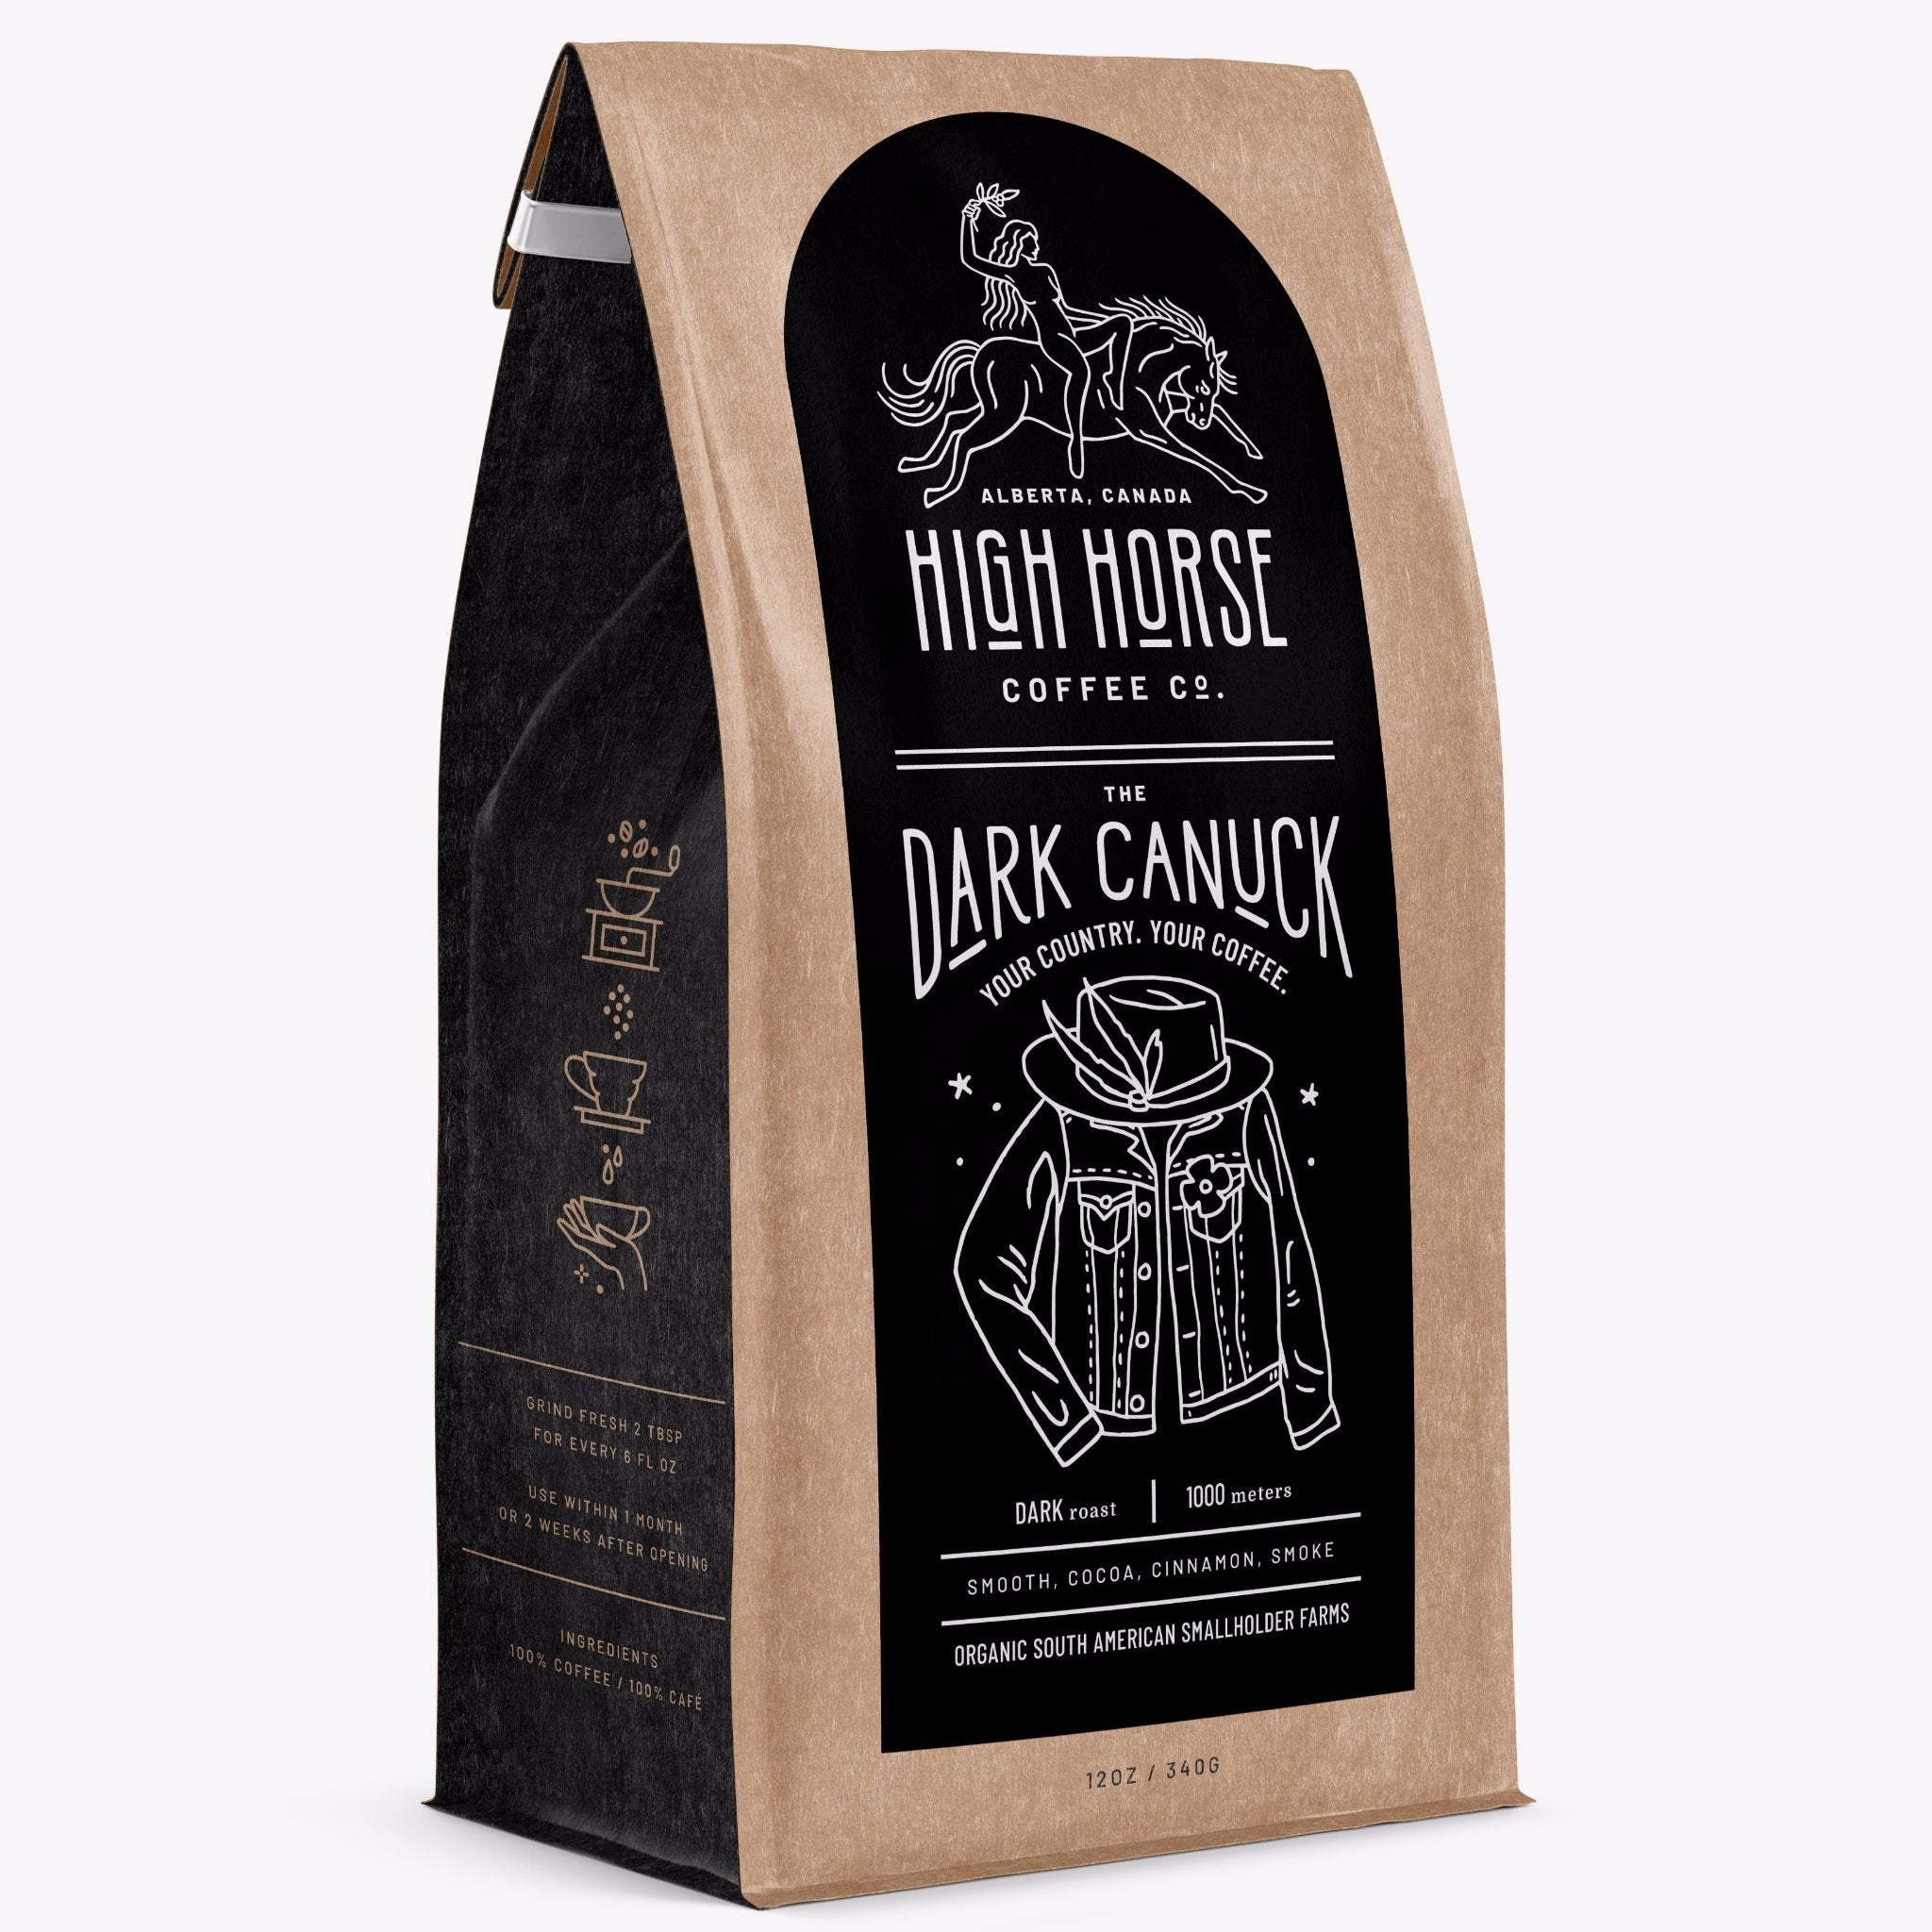 The Dark Canuck - Dark Roast Coffee - High Horse Coffee Company